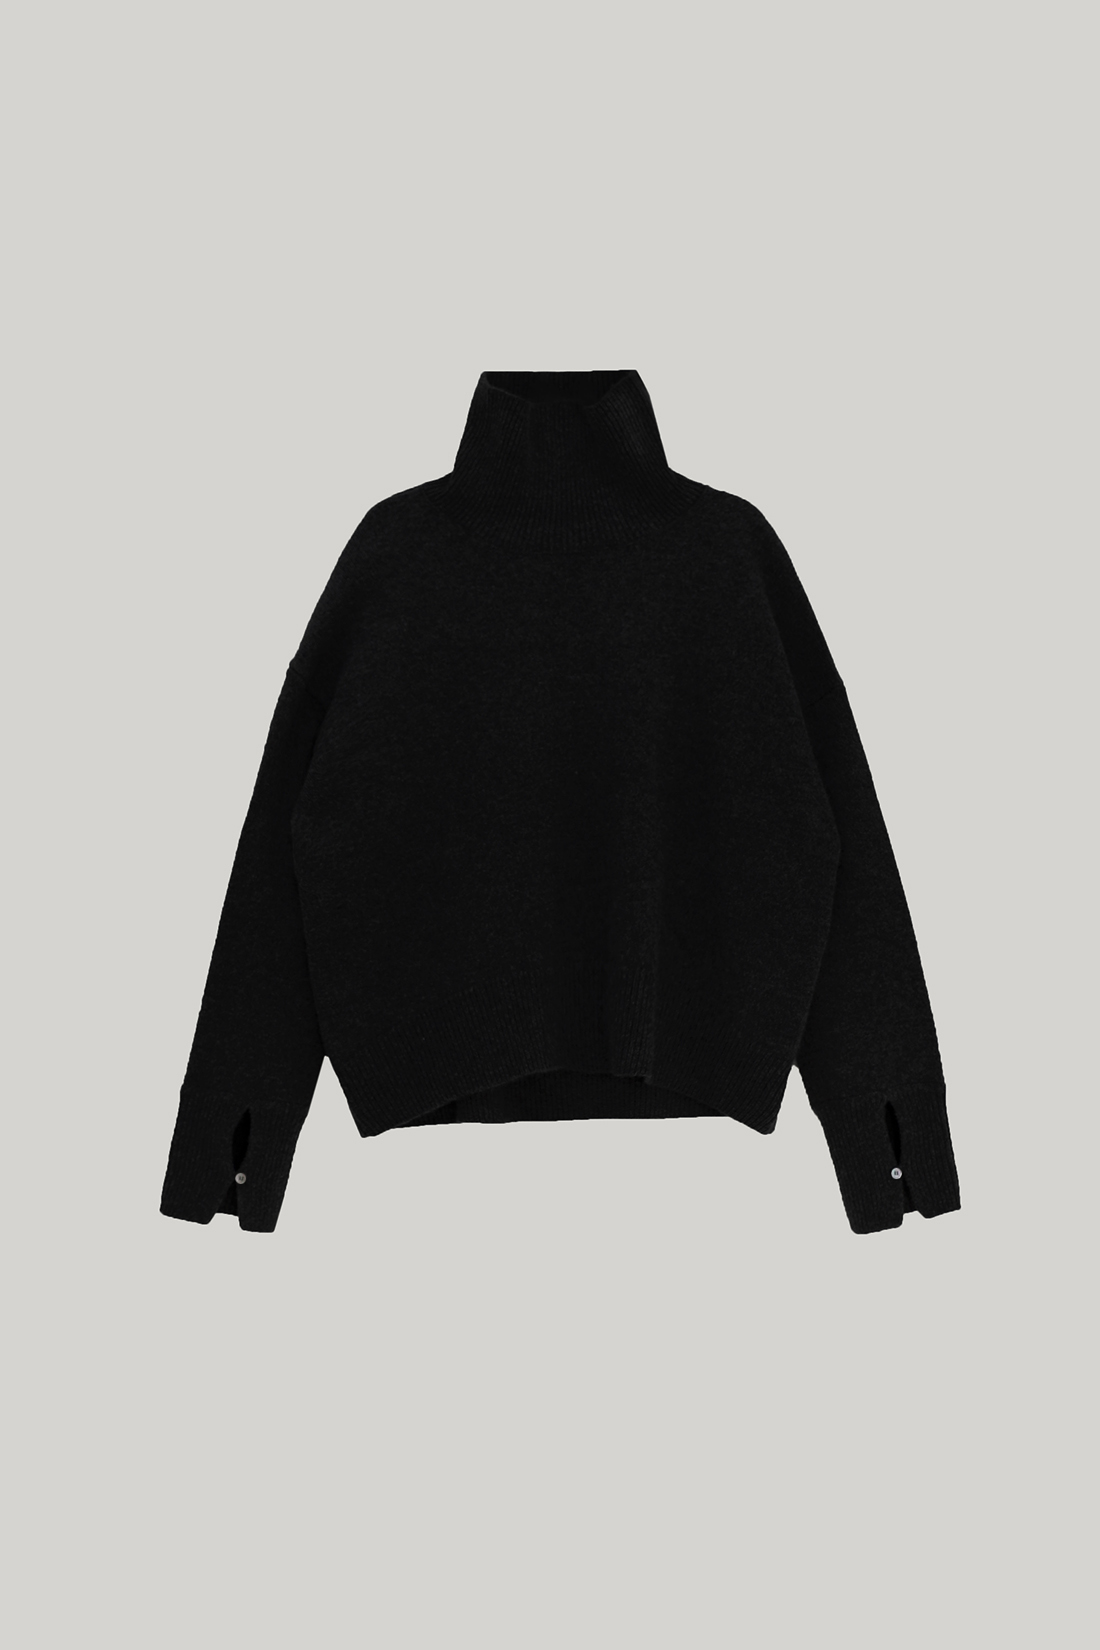 Becky Cashmere 100% High-neck Sweater (Black)